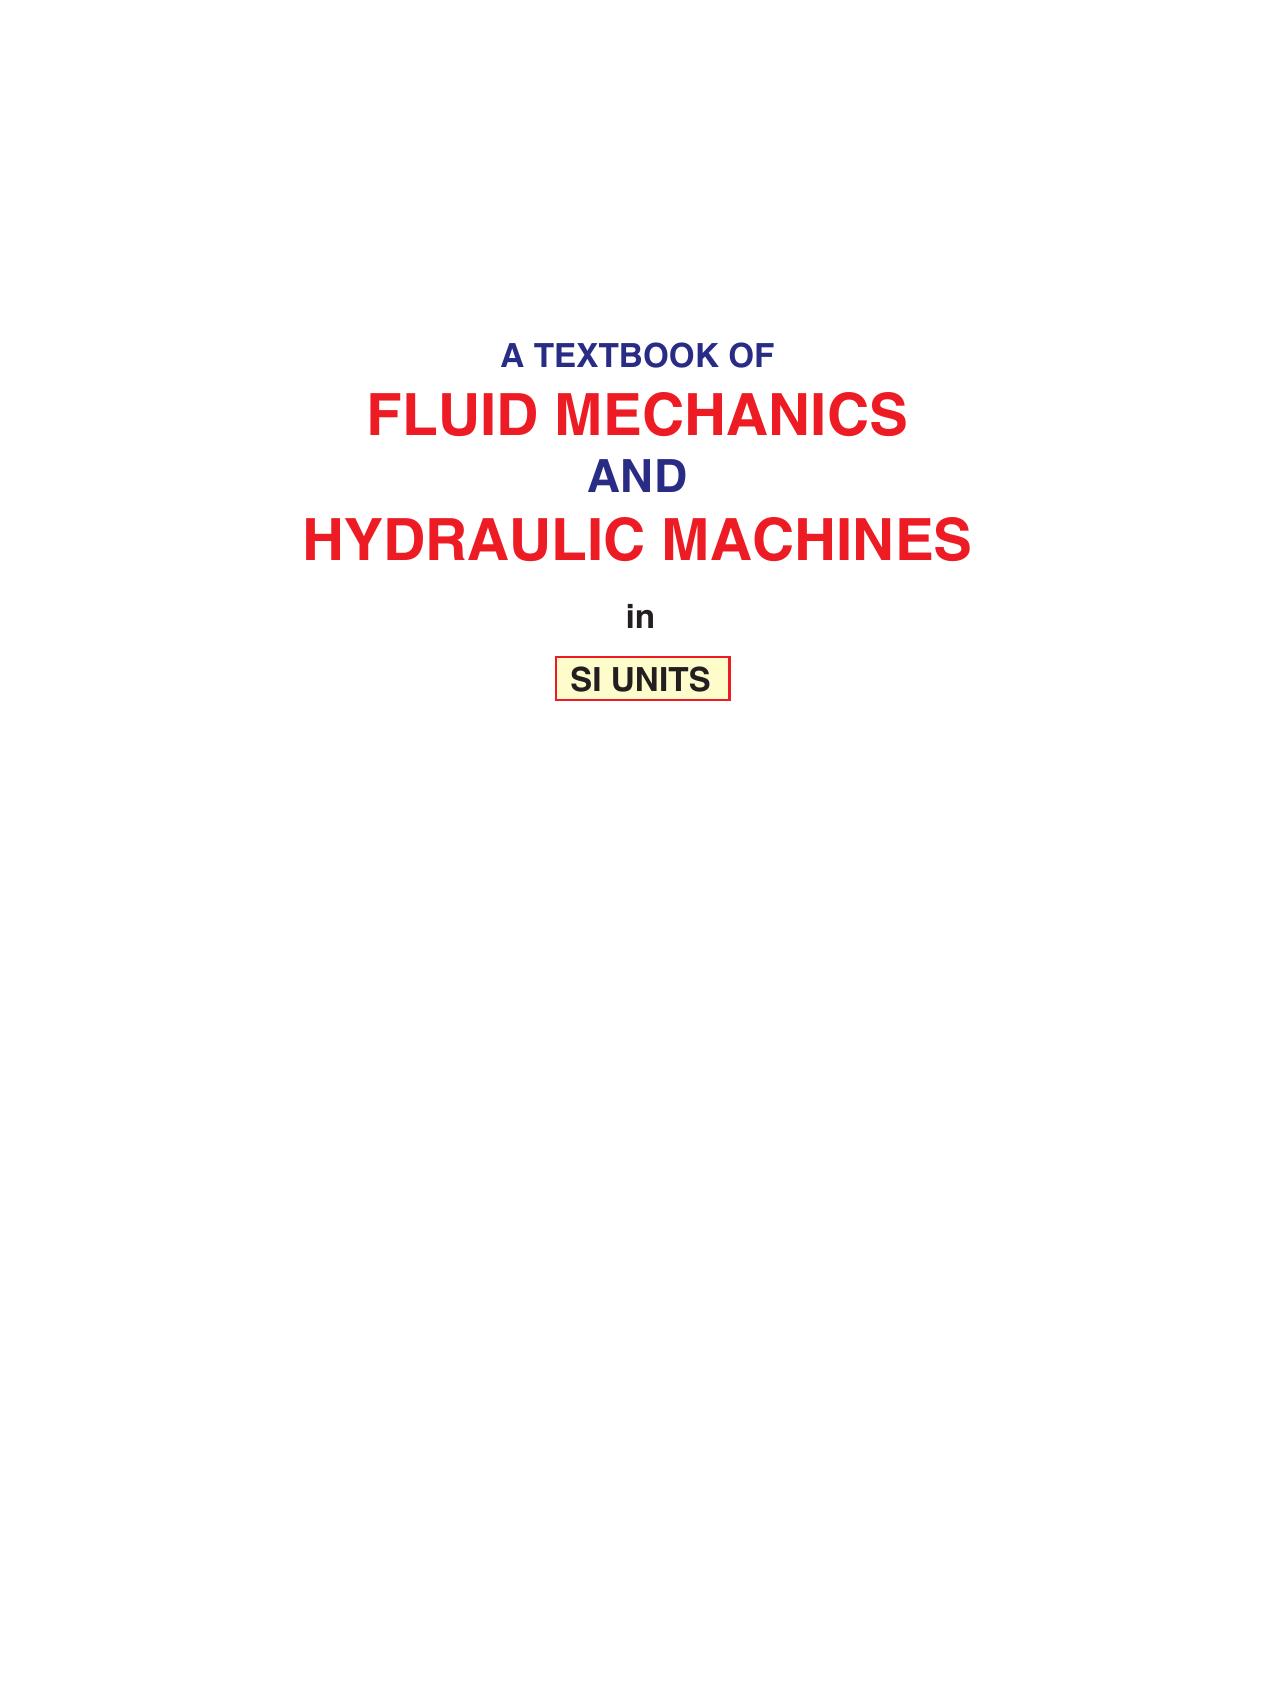 A Textbook of Fluid Mechanics & Hydraulic Machines By R K Rajput 2008